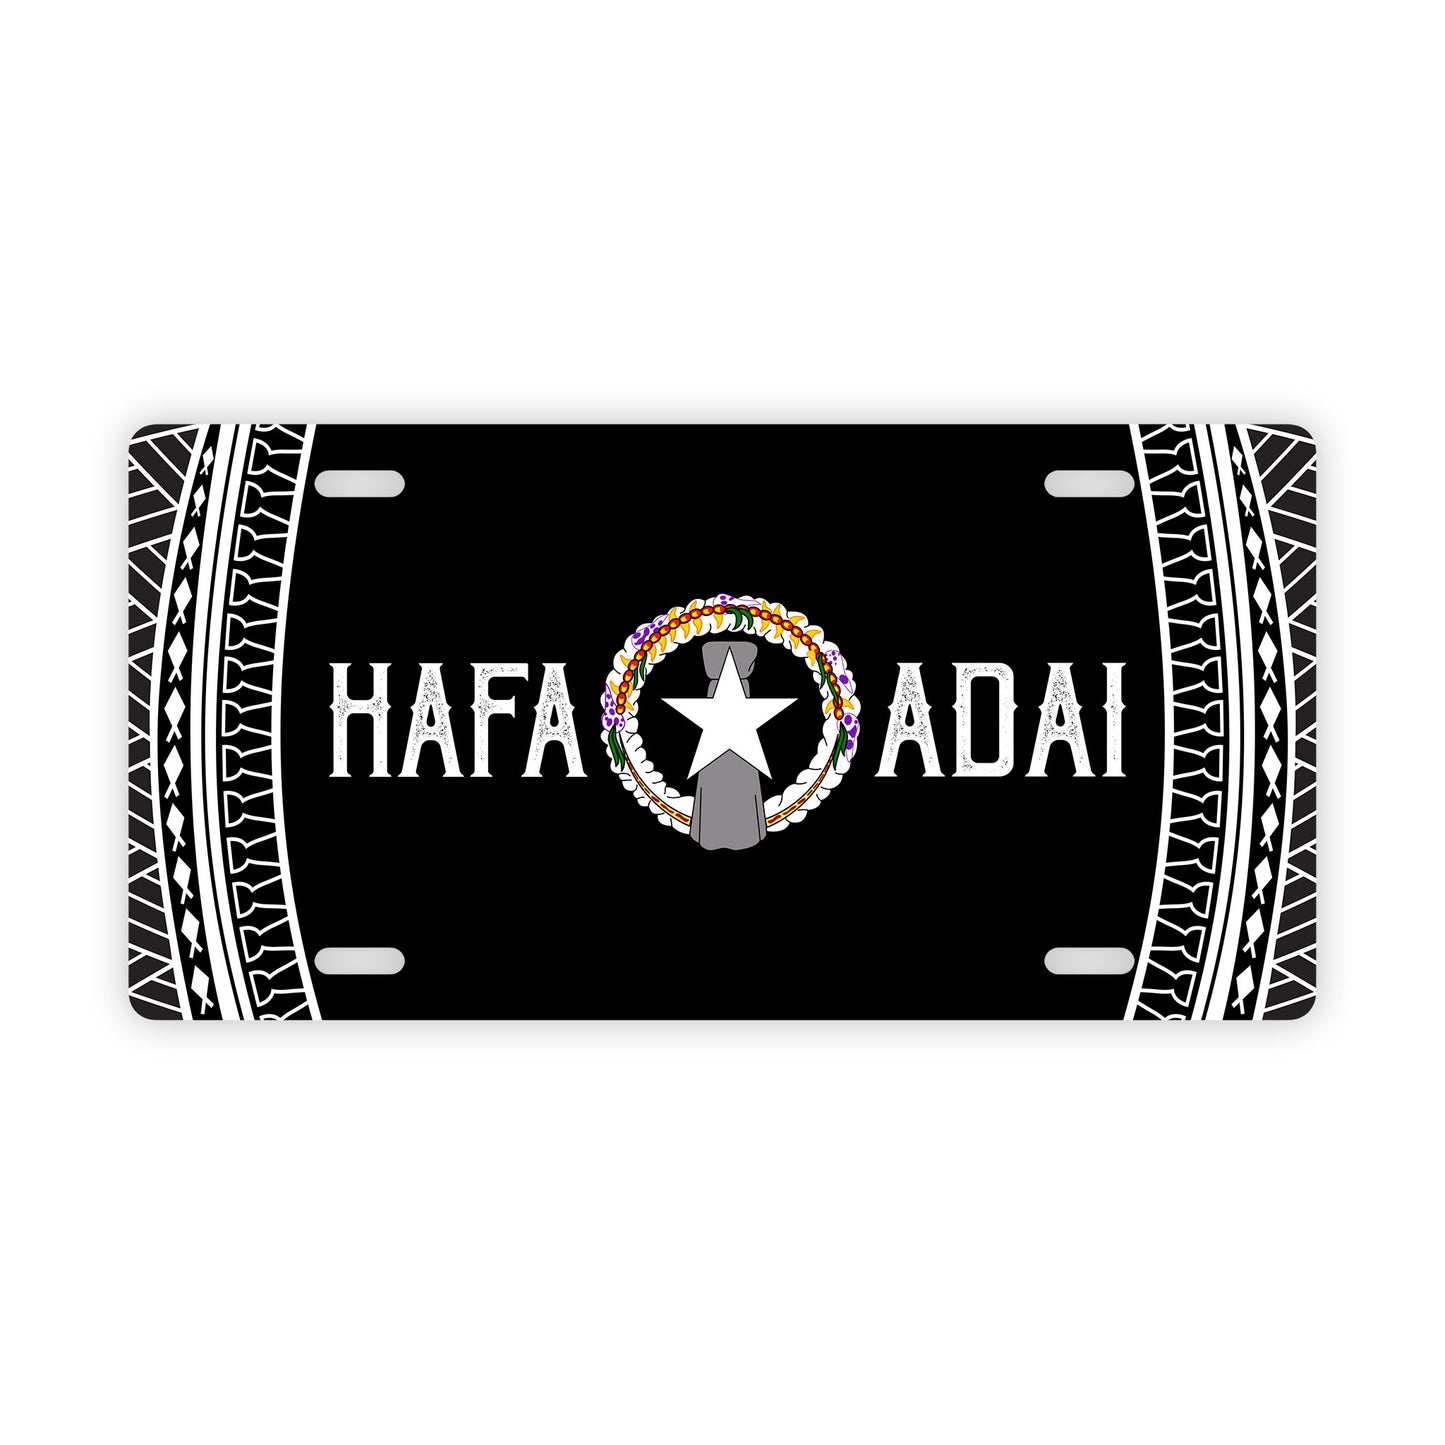 Hafa Adai Tribal Black CNMI Saipan Tinian Rota Car License Plate